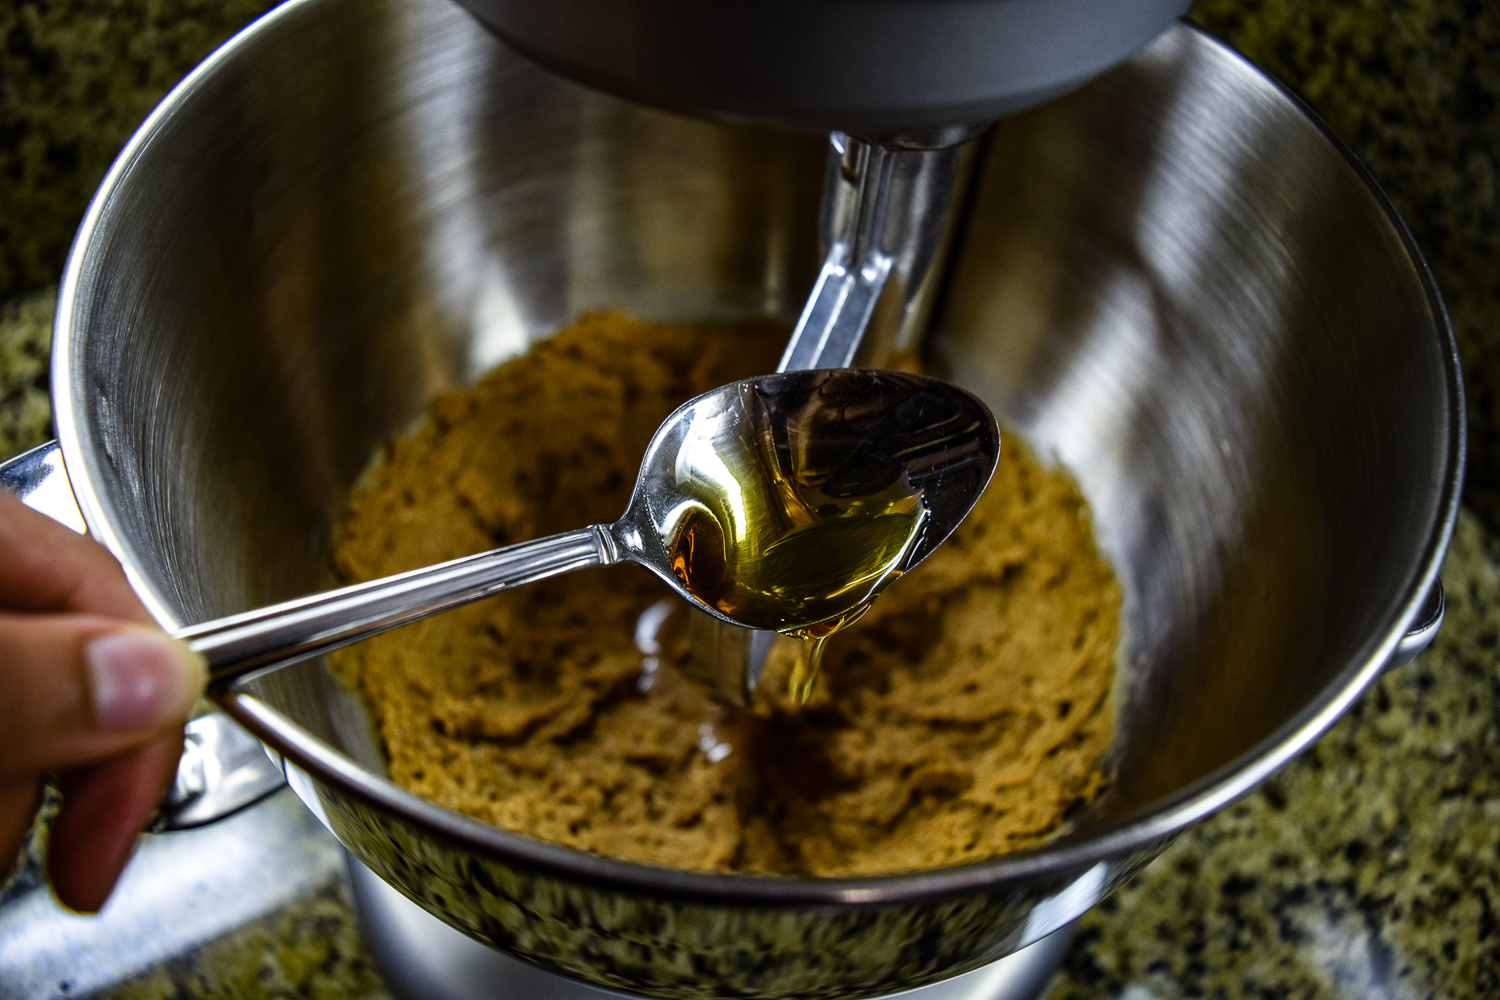 Adding the maple syrup to the KitchenAid Mixer bowl